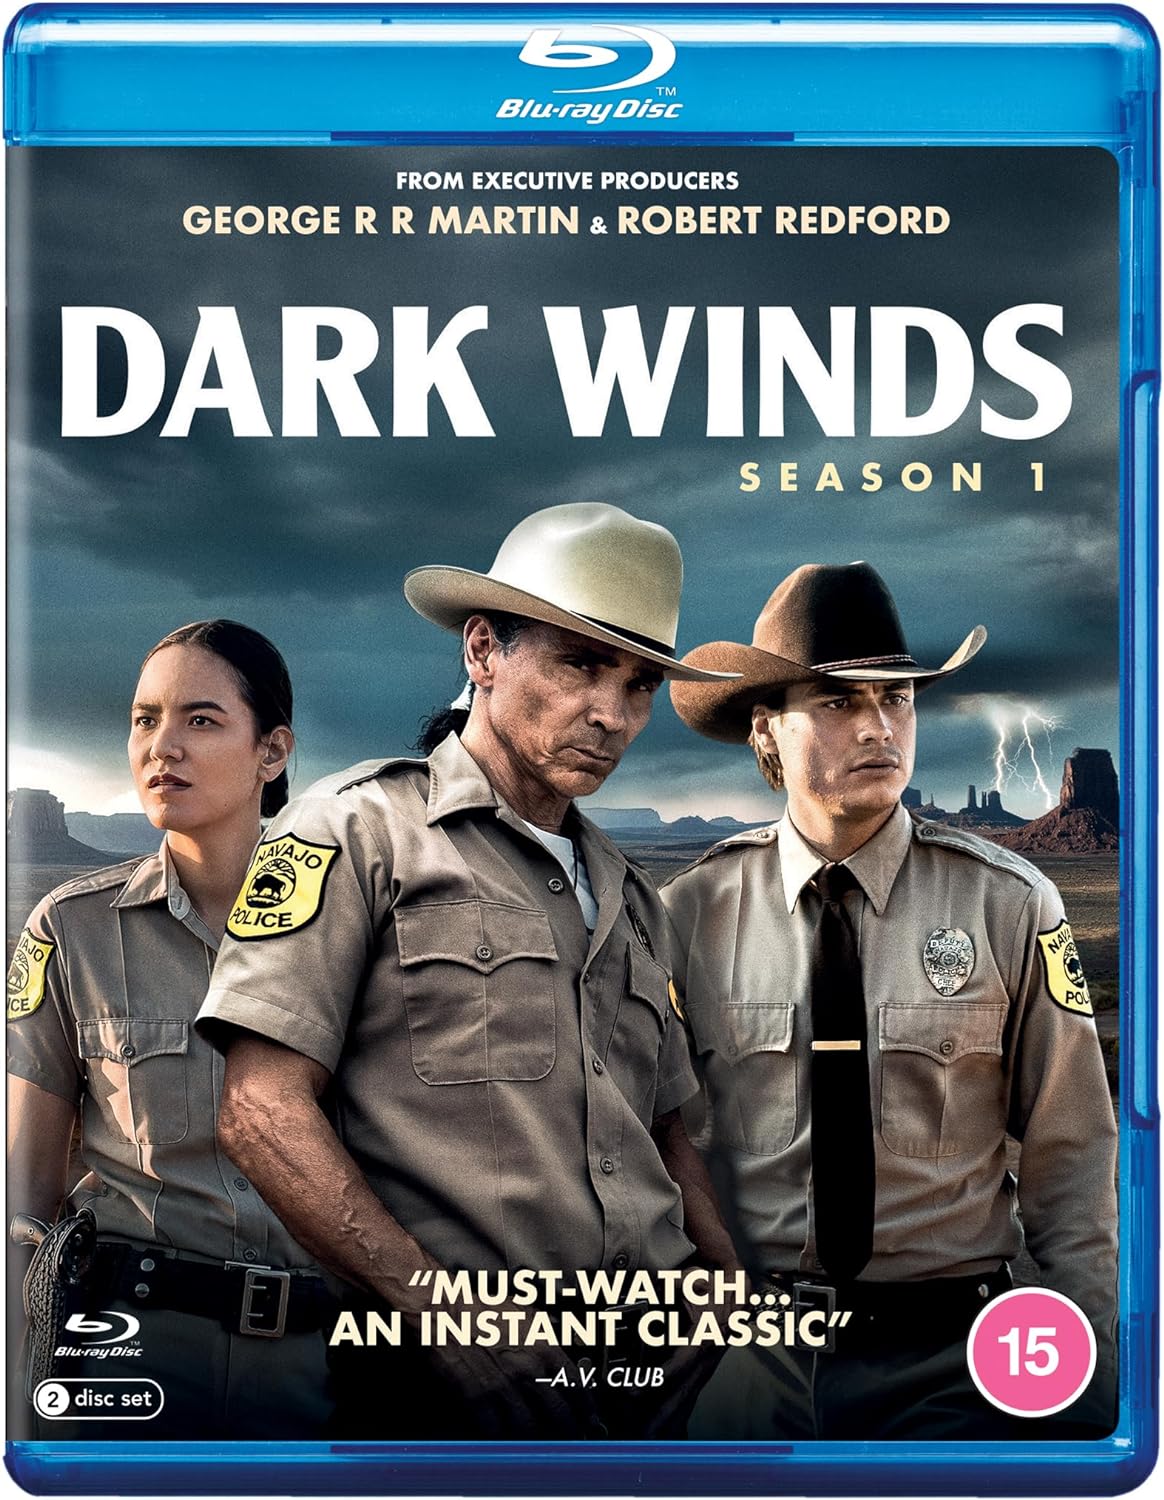 Dark Winds Season 1 DVD front cover